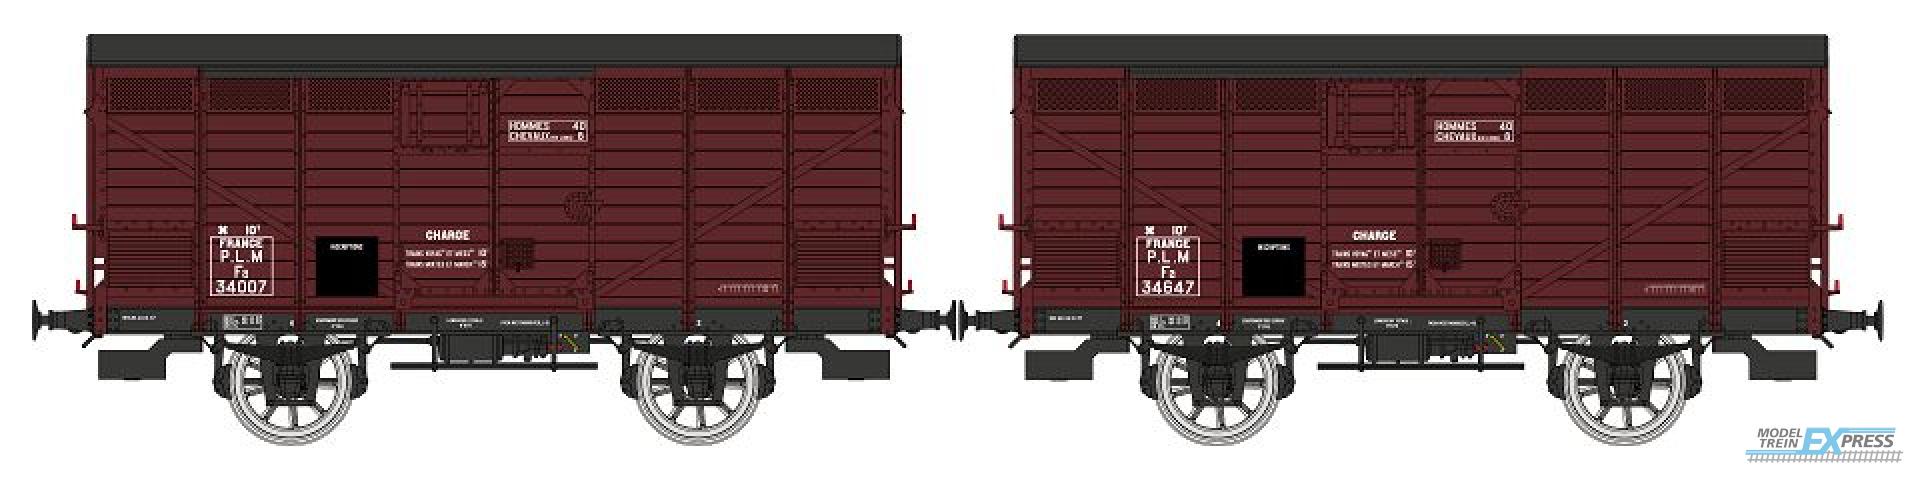 REE models WB-743 Set of 2 Vegetables wagons 1936 rebuilt PLM red Sideros, N° Fa 34007 & Fa 34647, PLM Era II